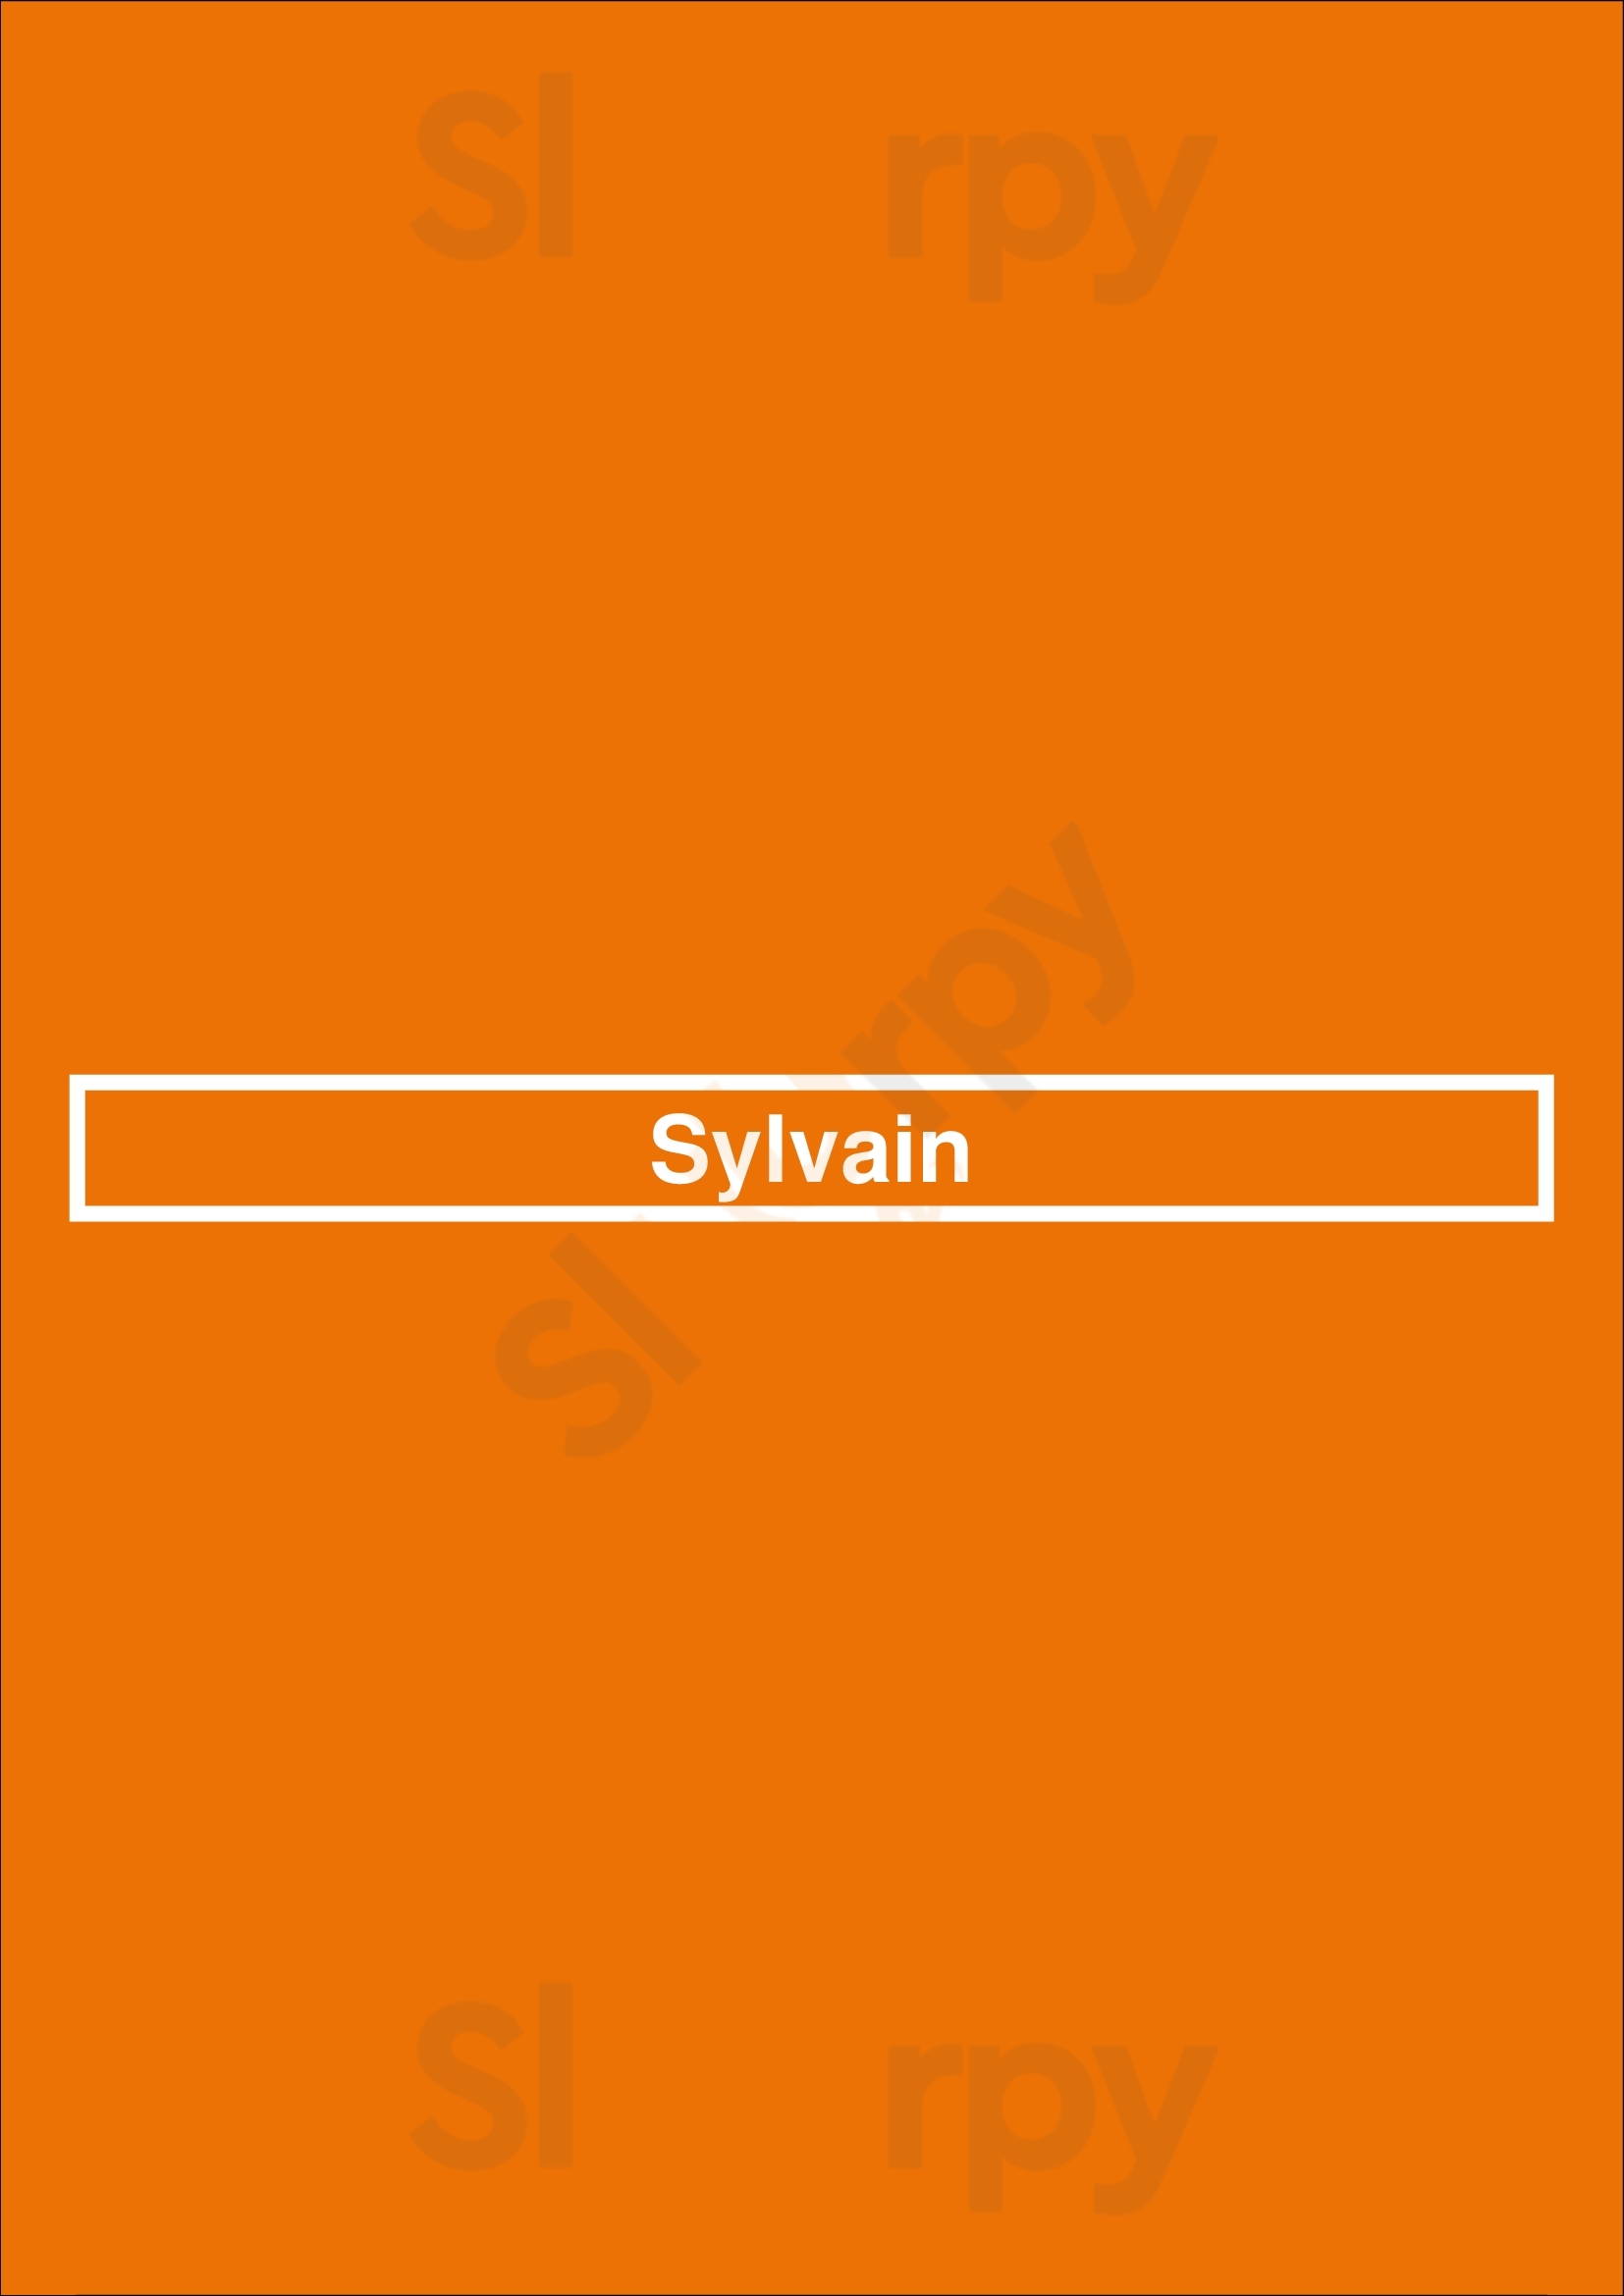 Sylvain New Orleans Menu - 1